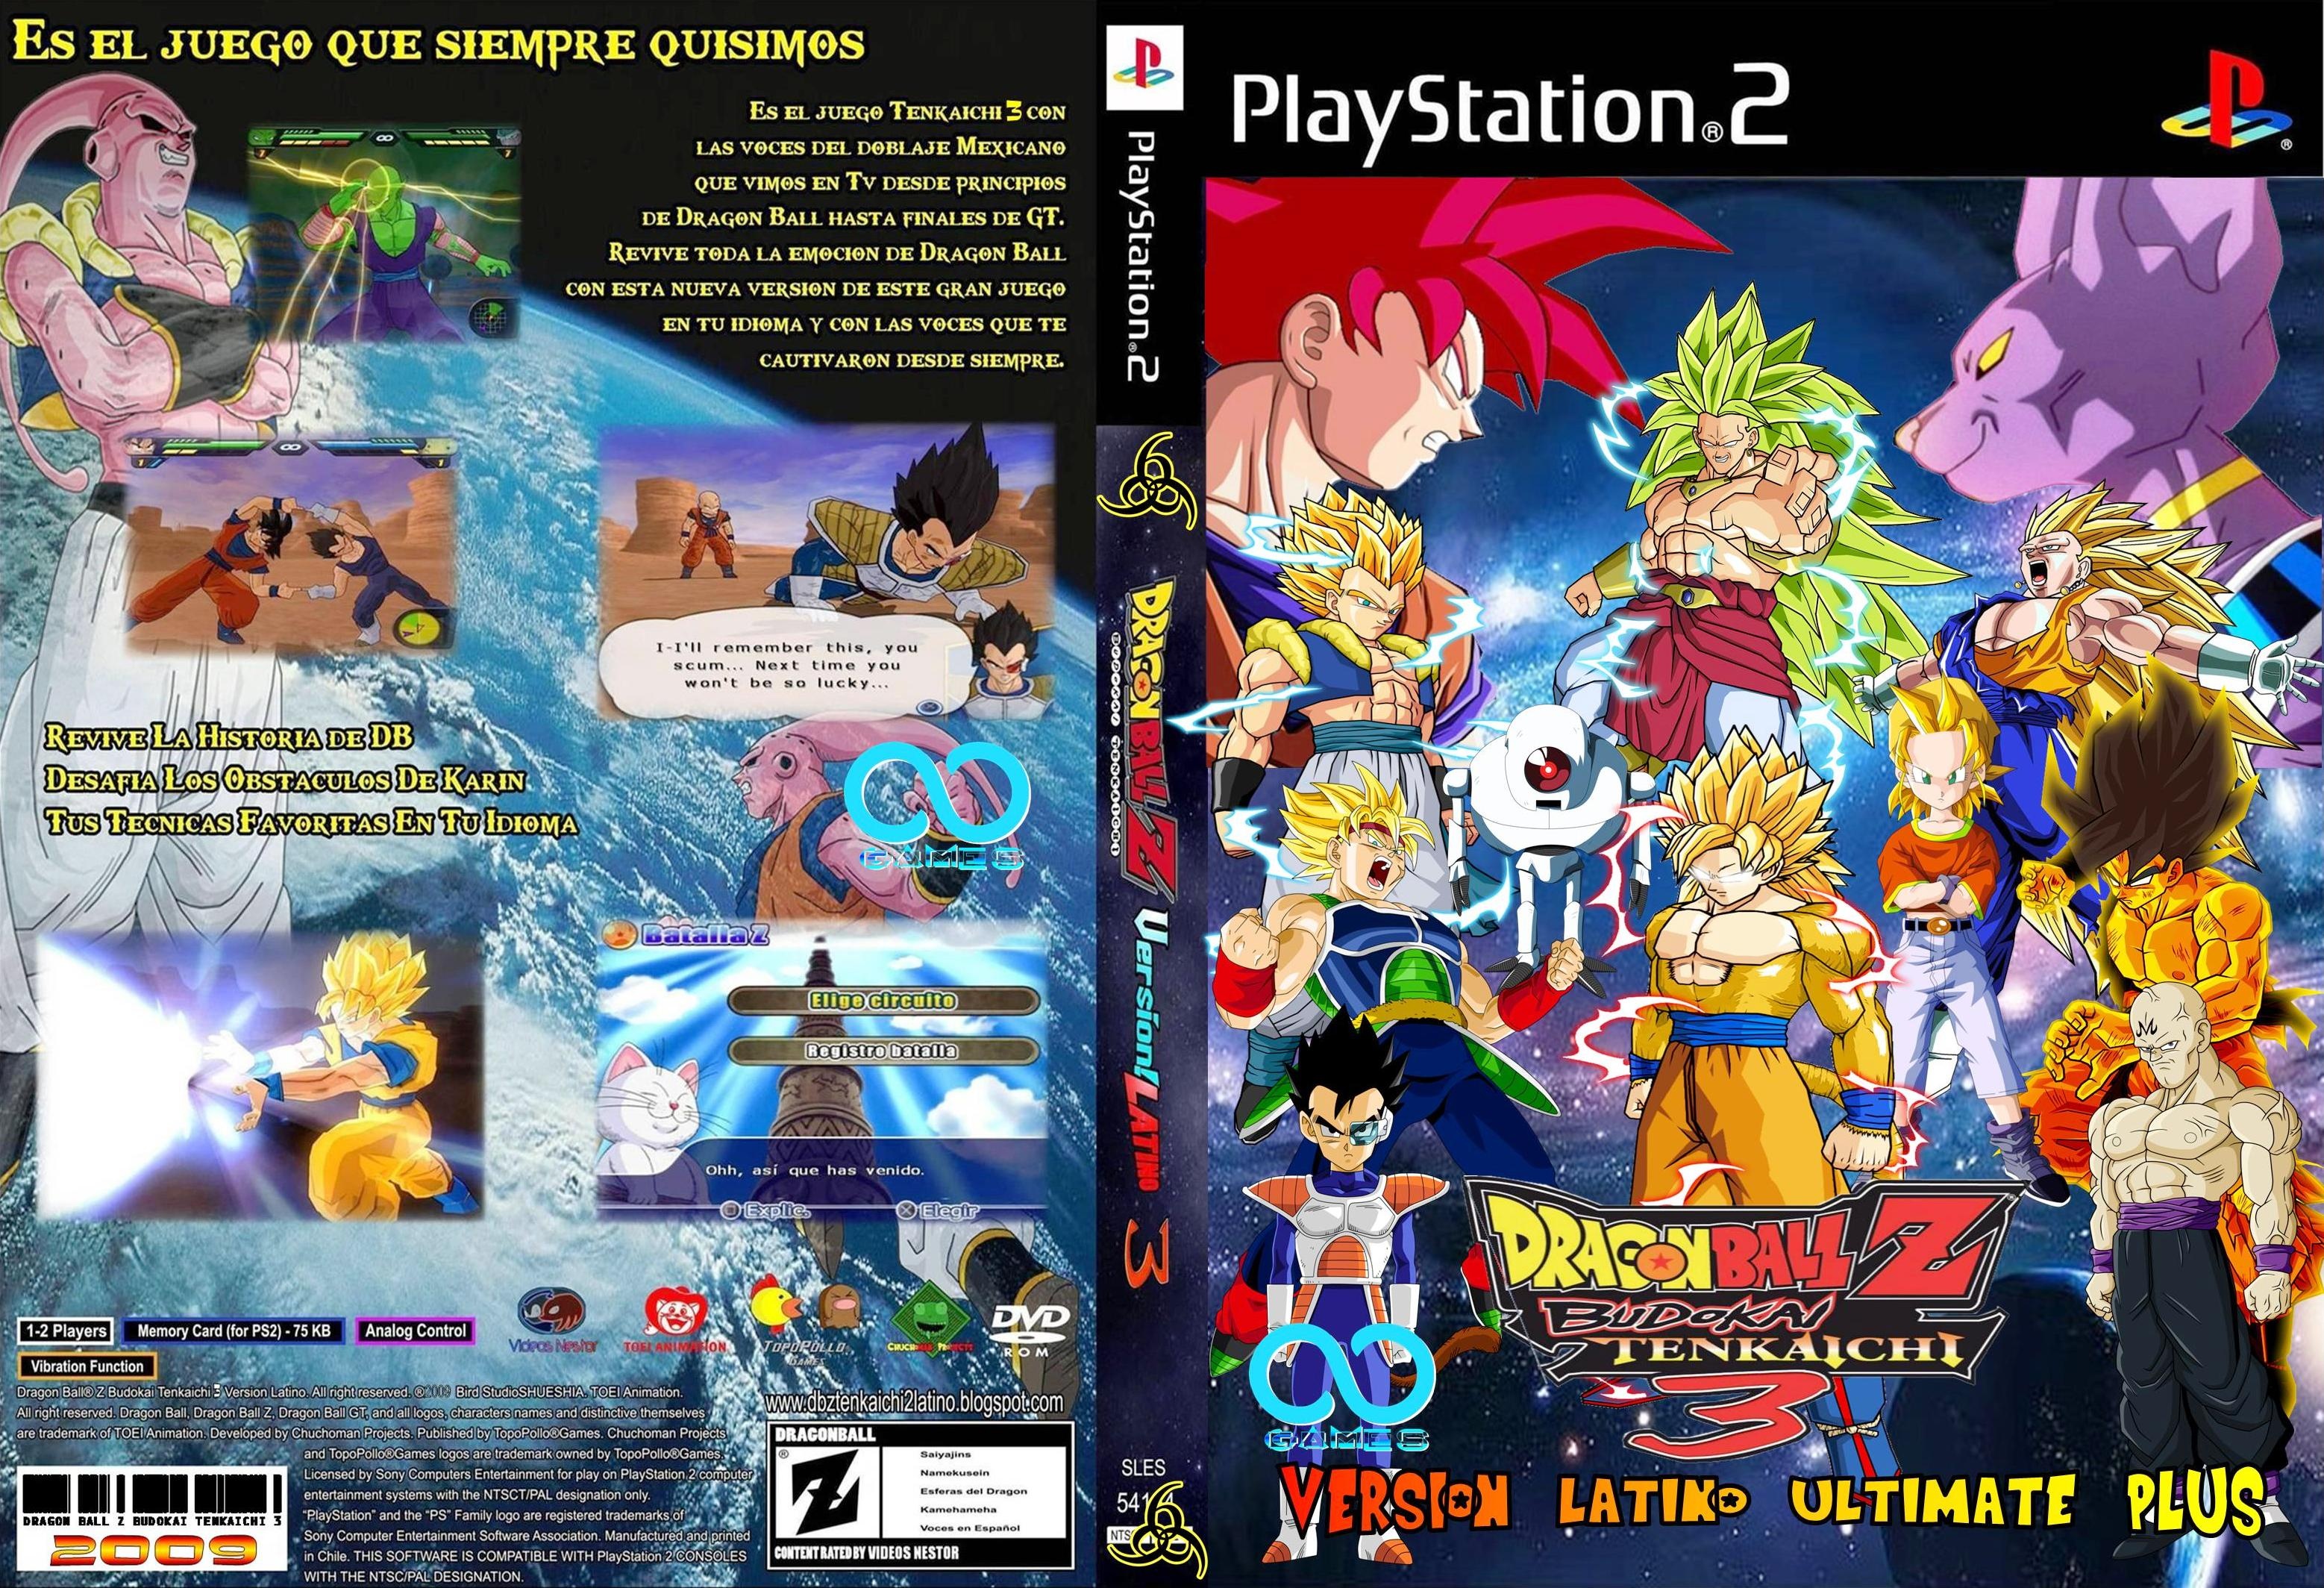 Dragon Ball Z: Budokai Tenkaichi 3 Latino Ultimate Plus box cover